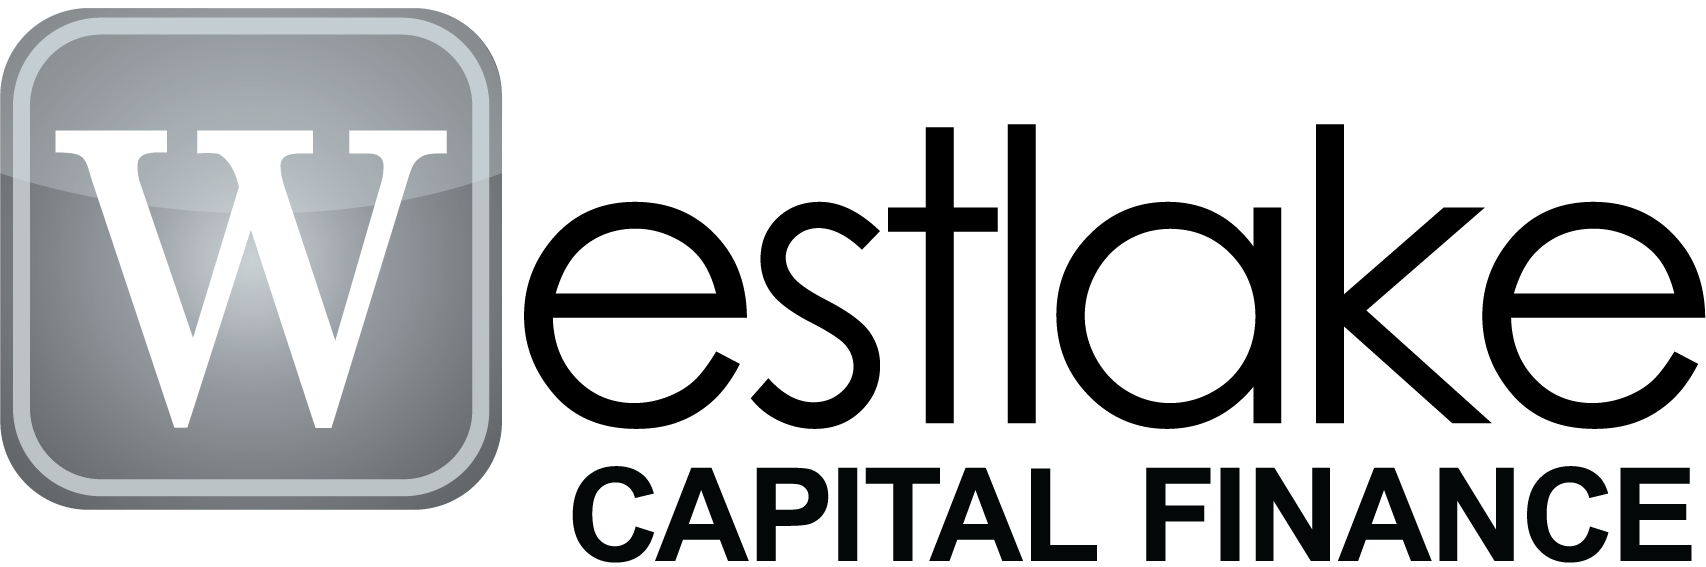 Westlake Capital Finance logo